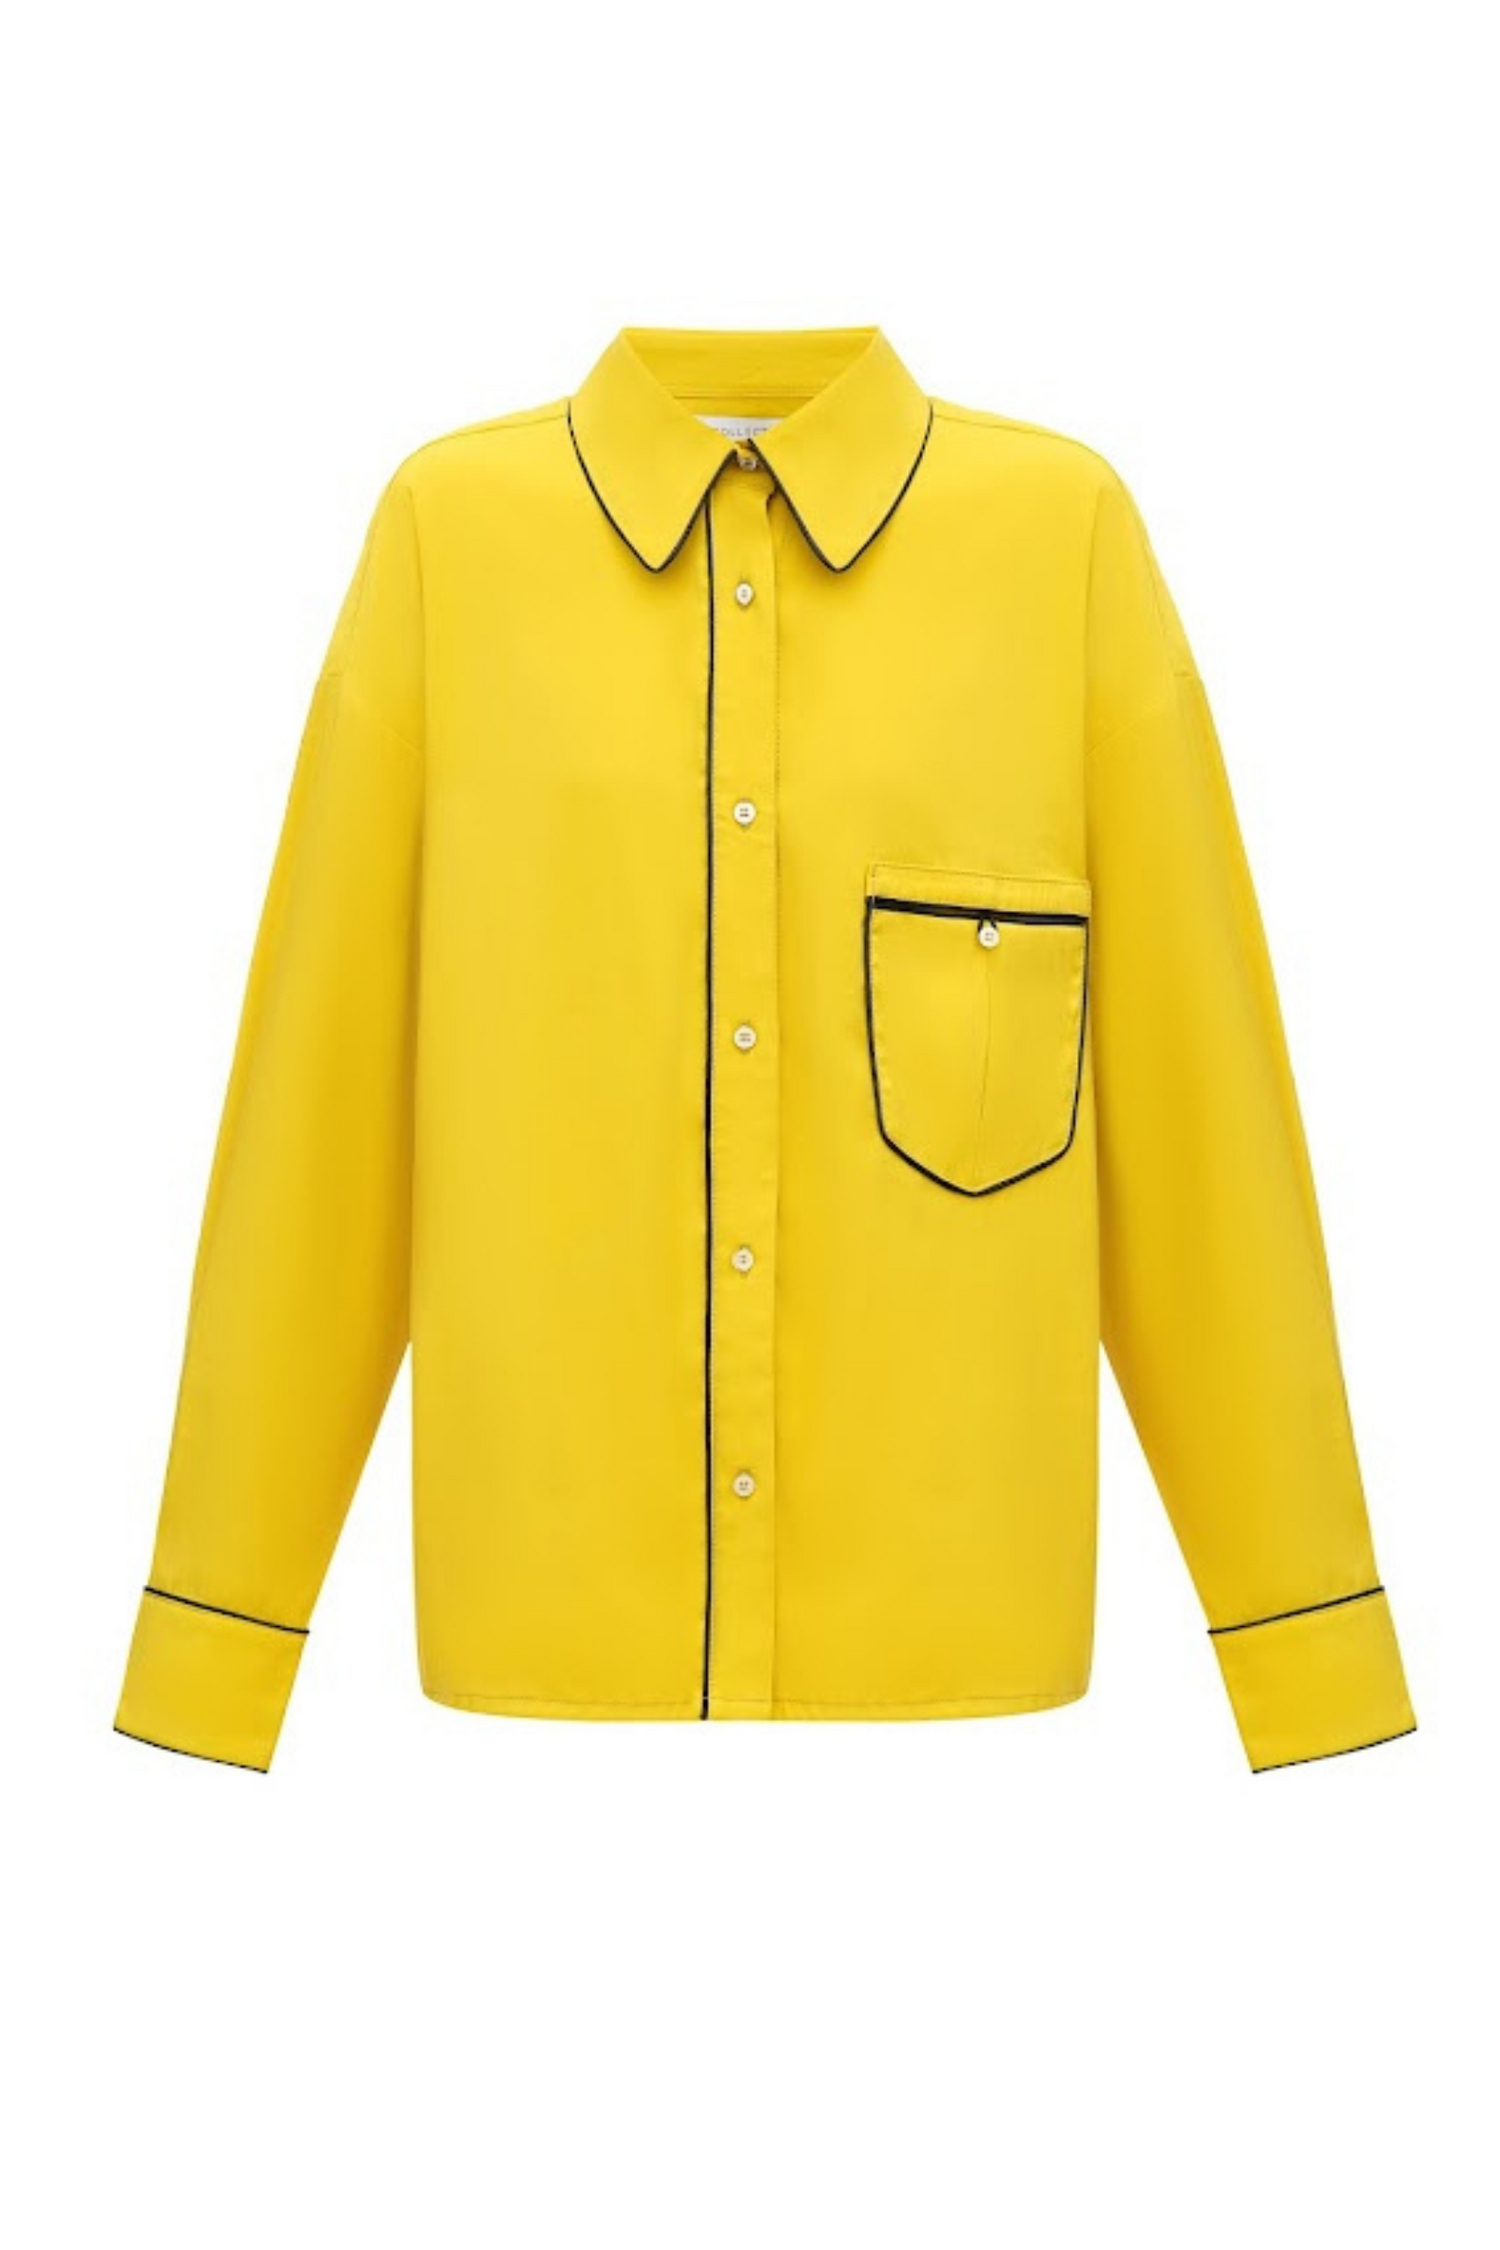 Костюм жовтий (брюки + сорочка) (AMBITNA)